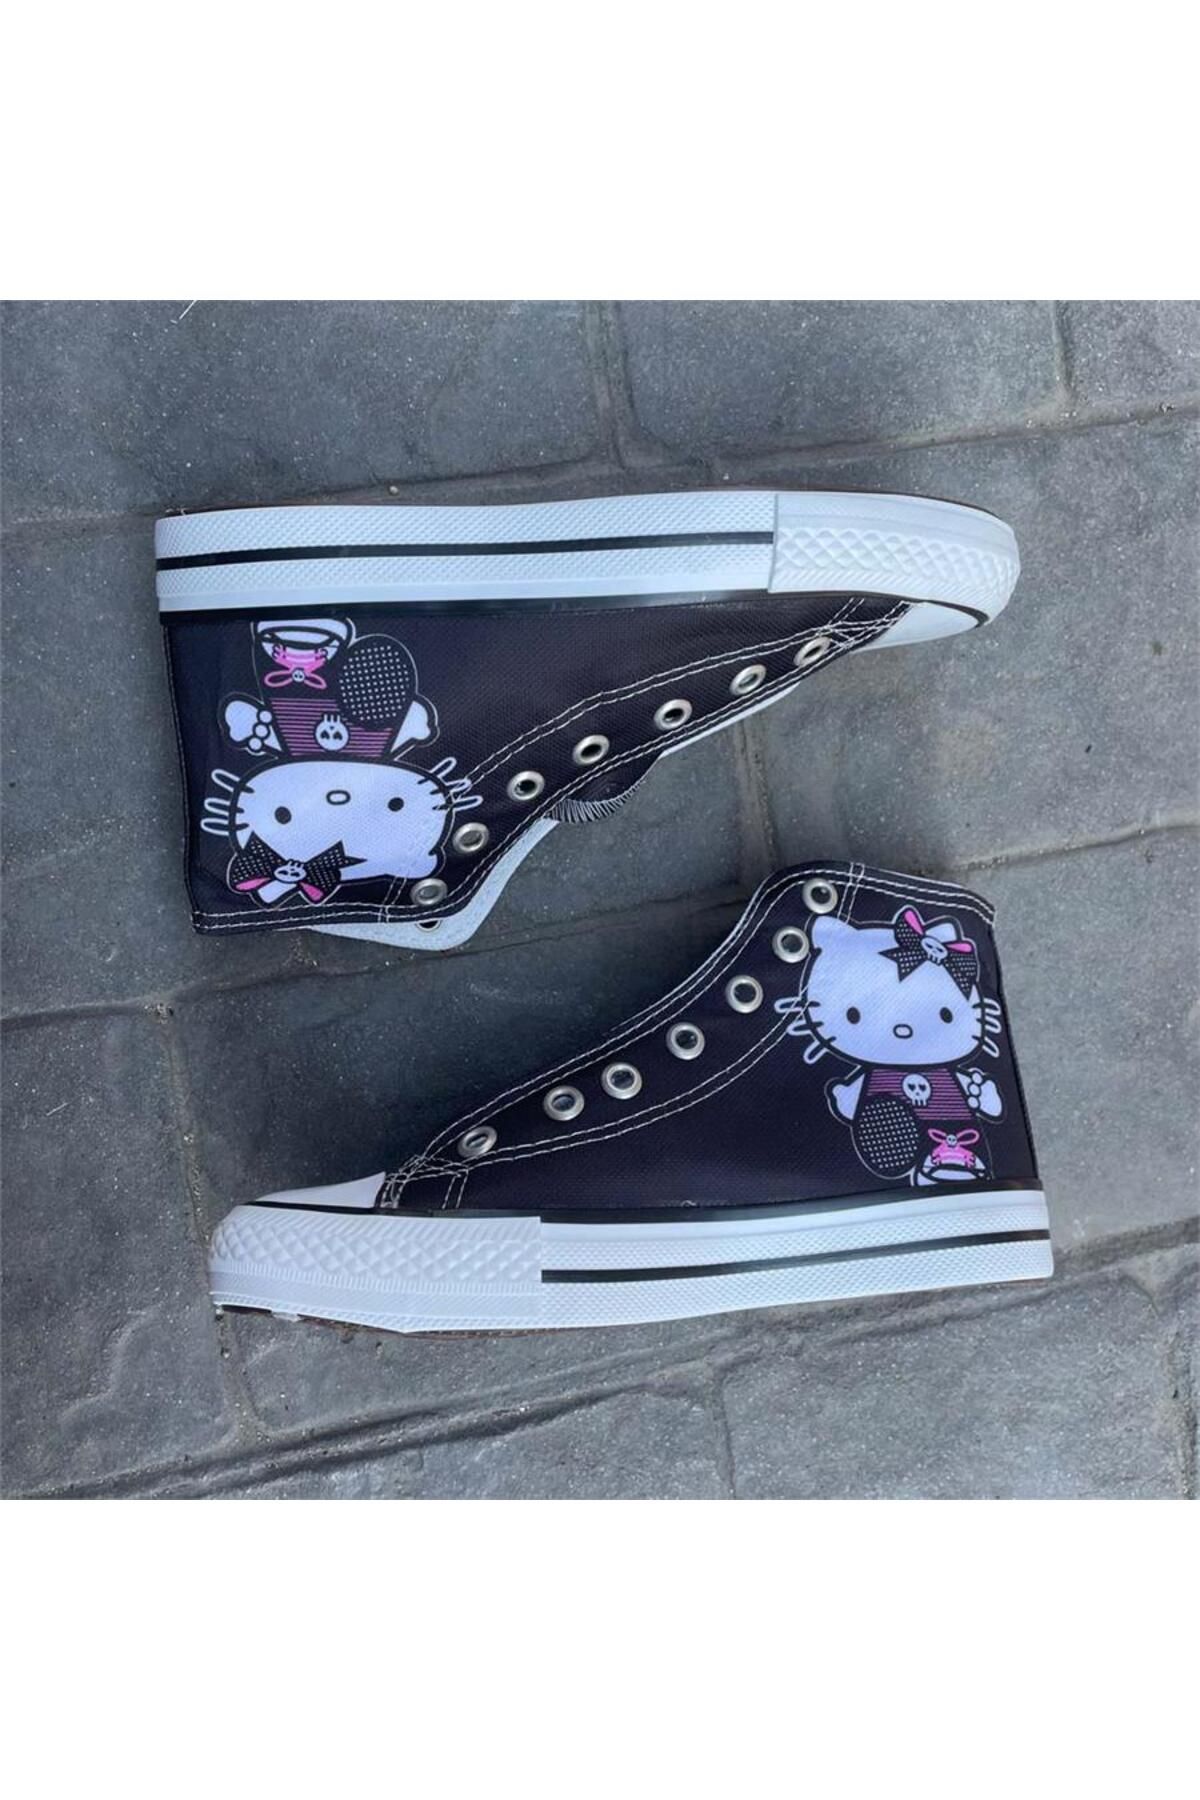 Köstebek Gothic Hello Kitty Uzun Kanvas Ayakkabı